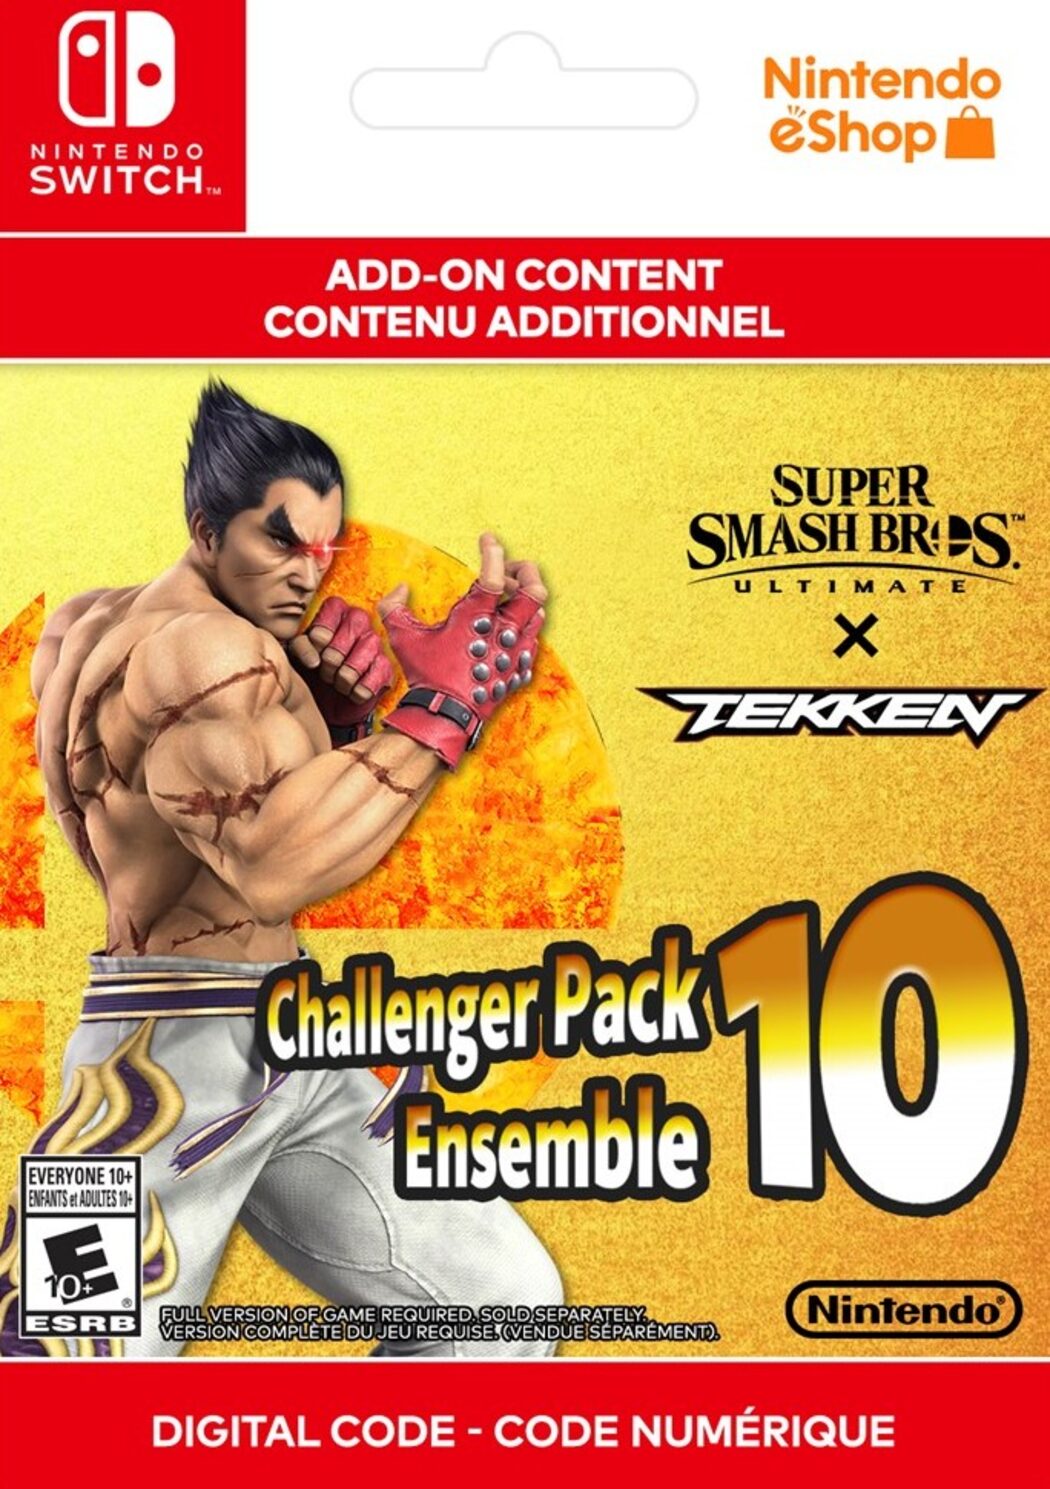 The Ultimate Challenger Bundle